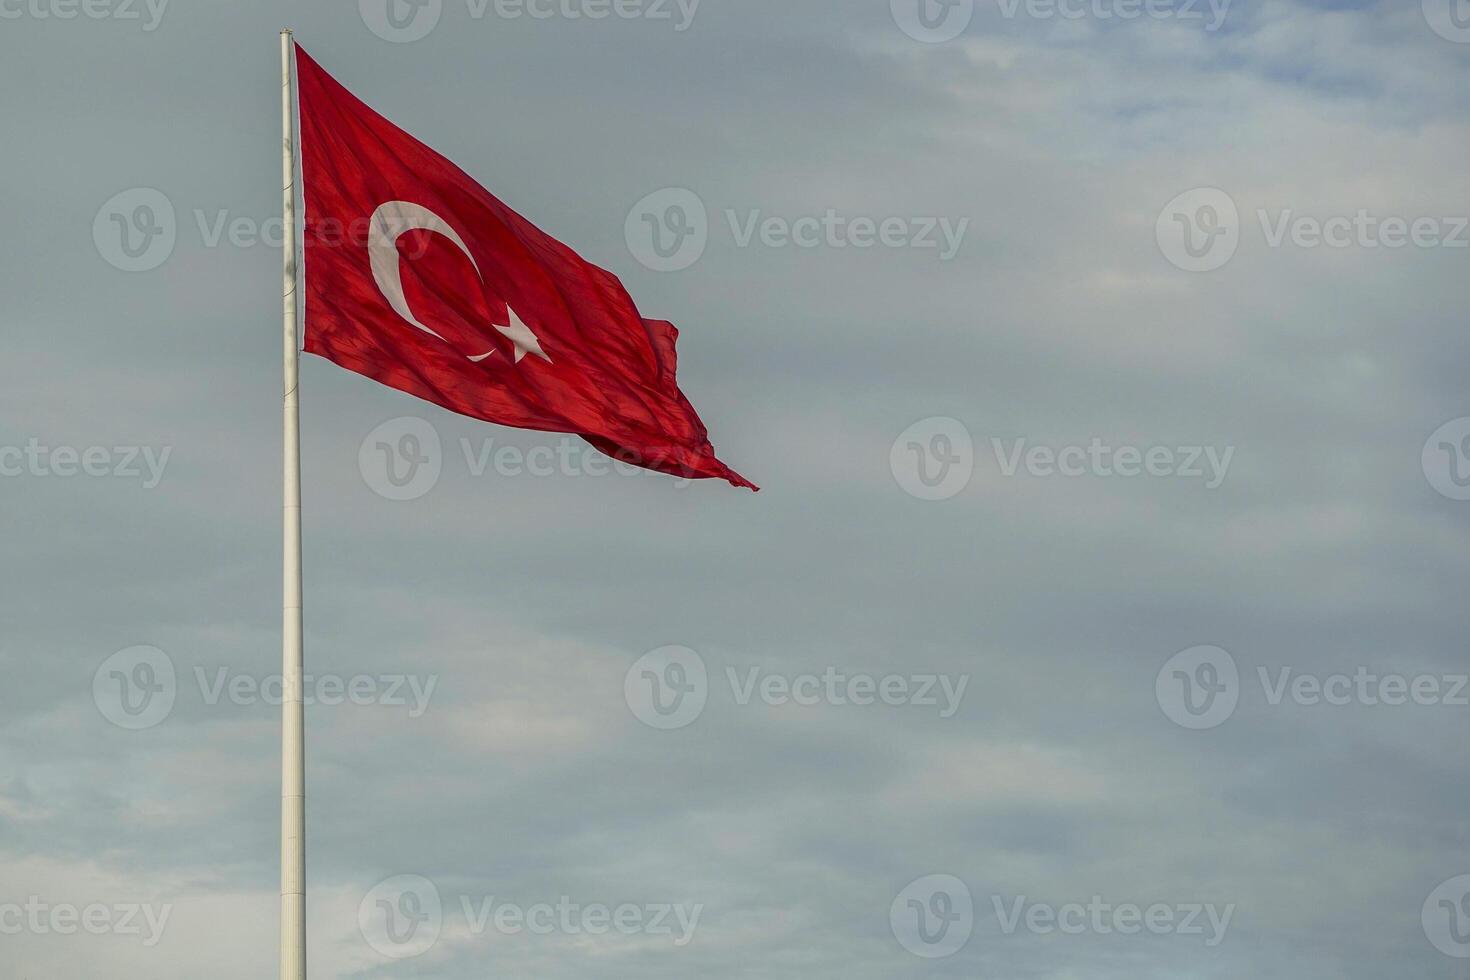 trukish vlag in ortakoy wijk visie van Istanbul Bosporus reis foto